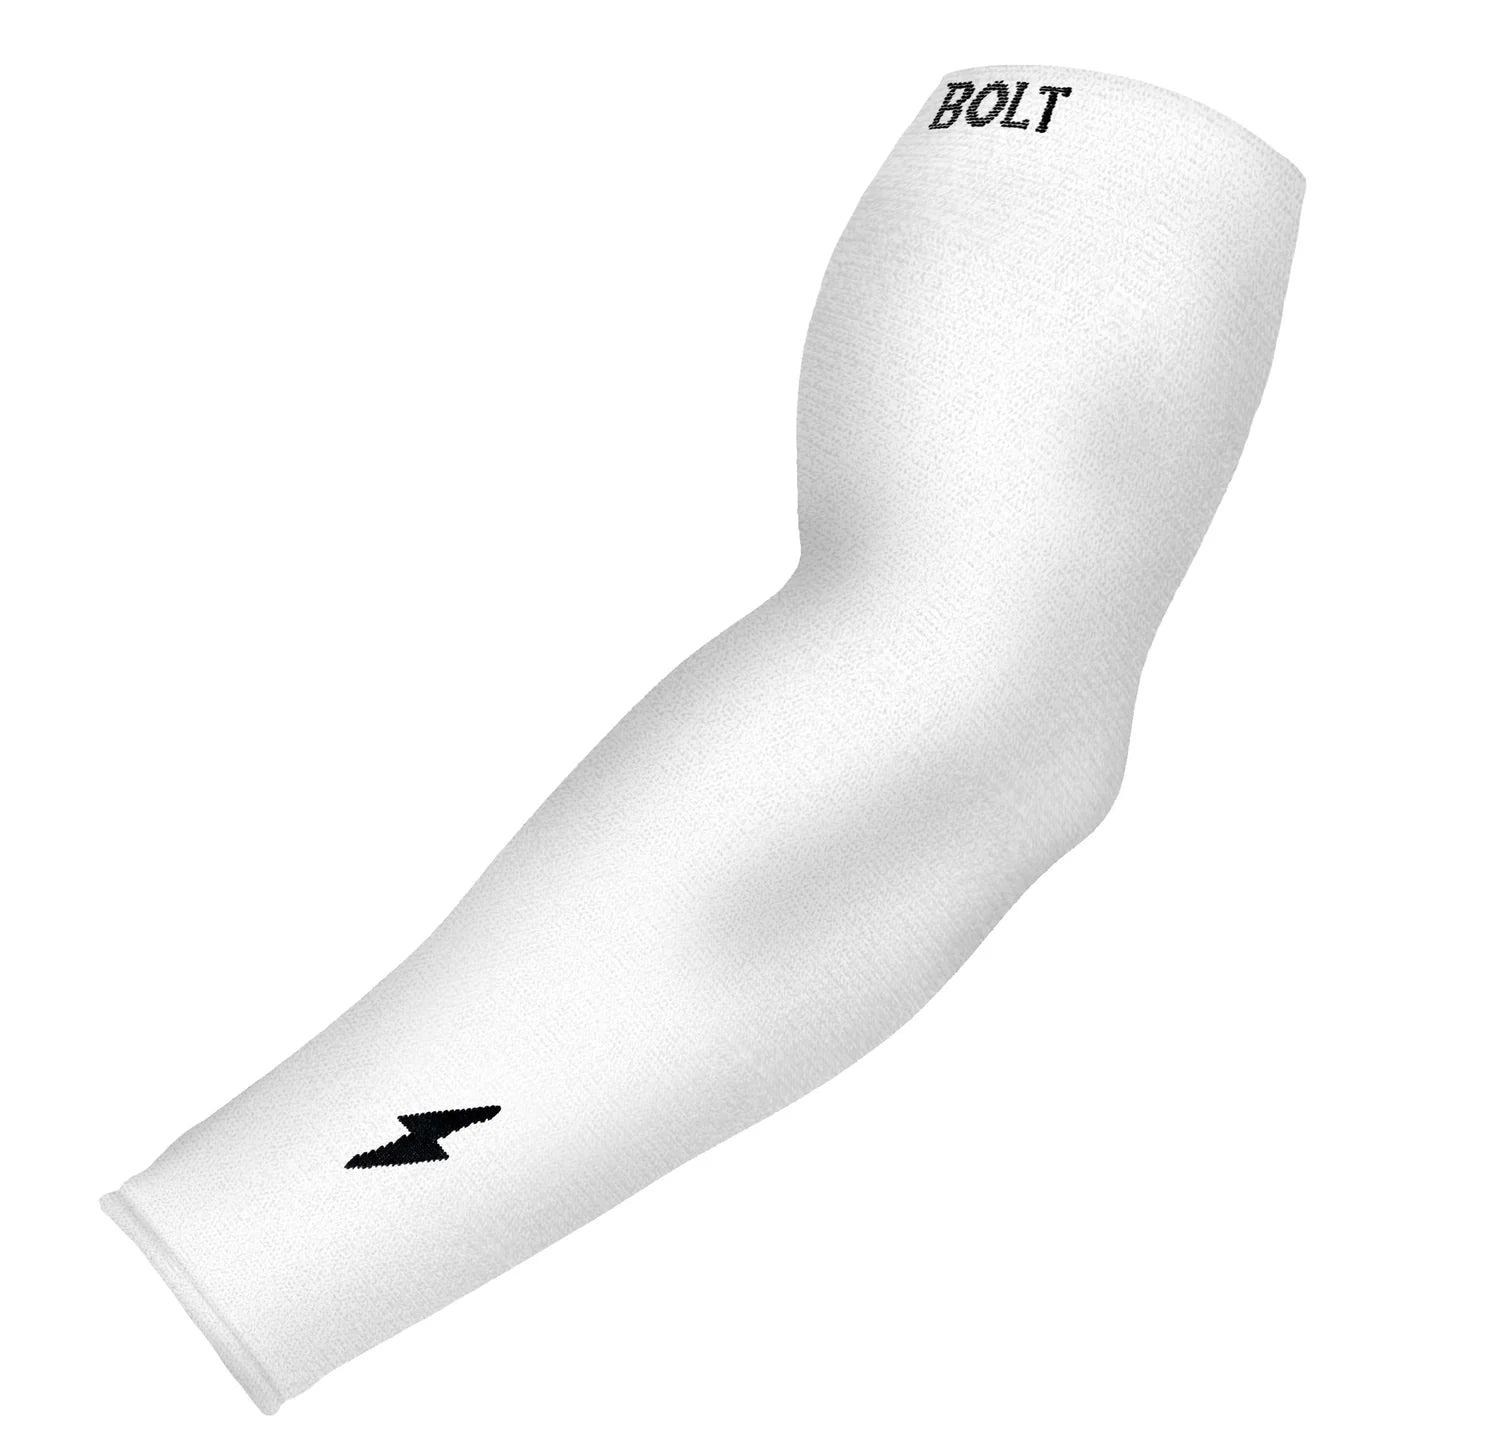 BRUCE BOLT Premium White Arm Sleeve